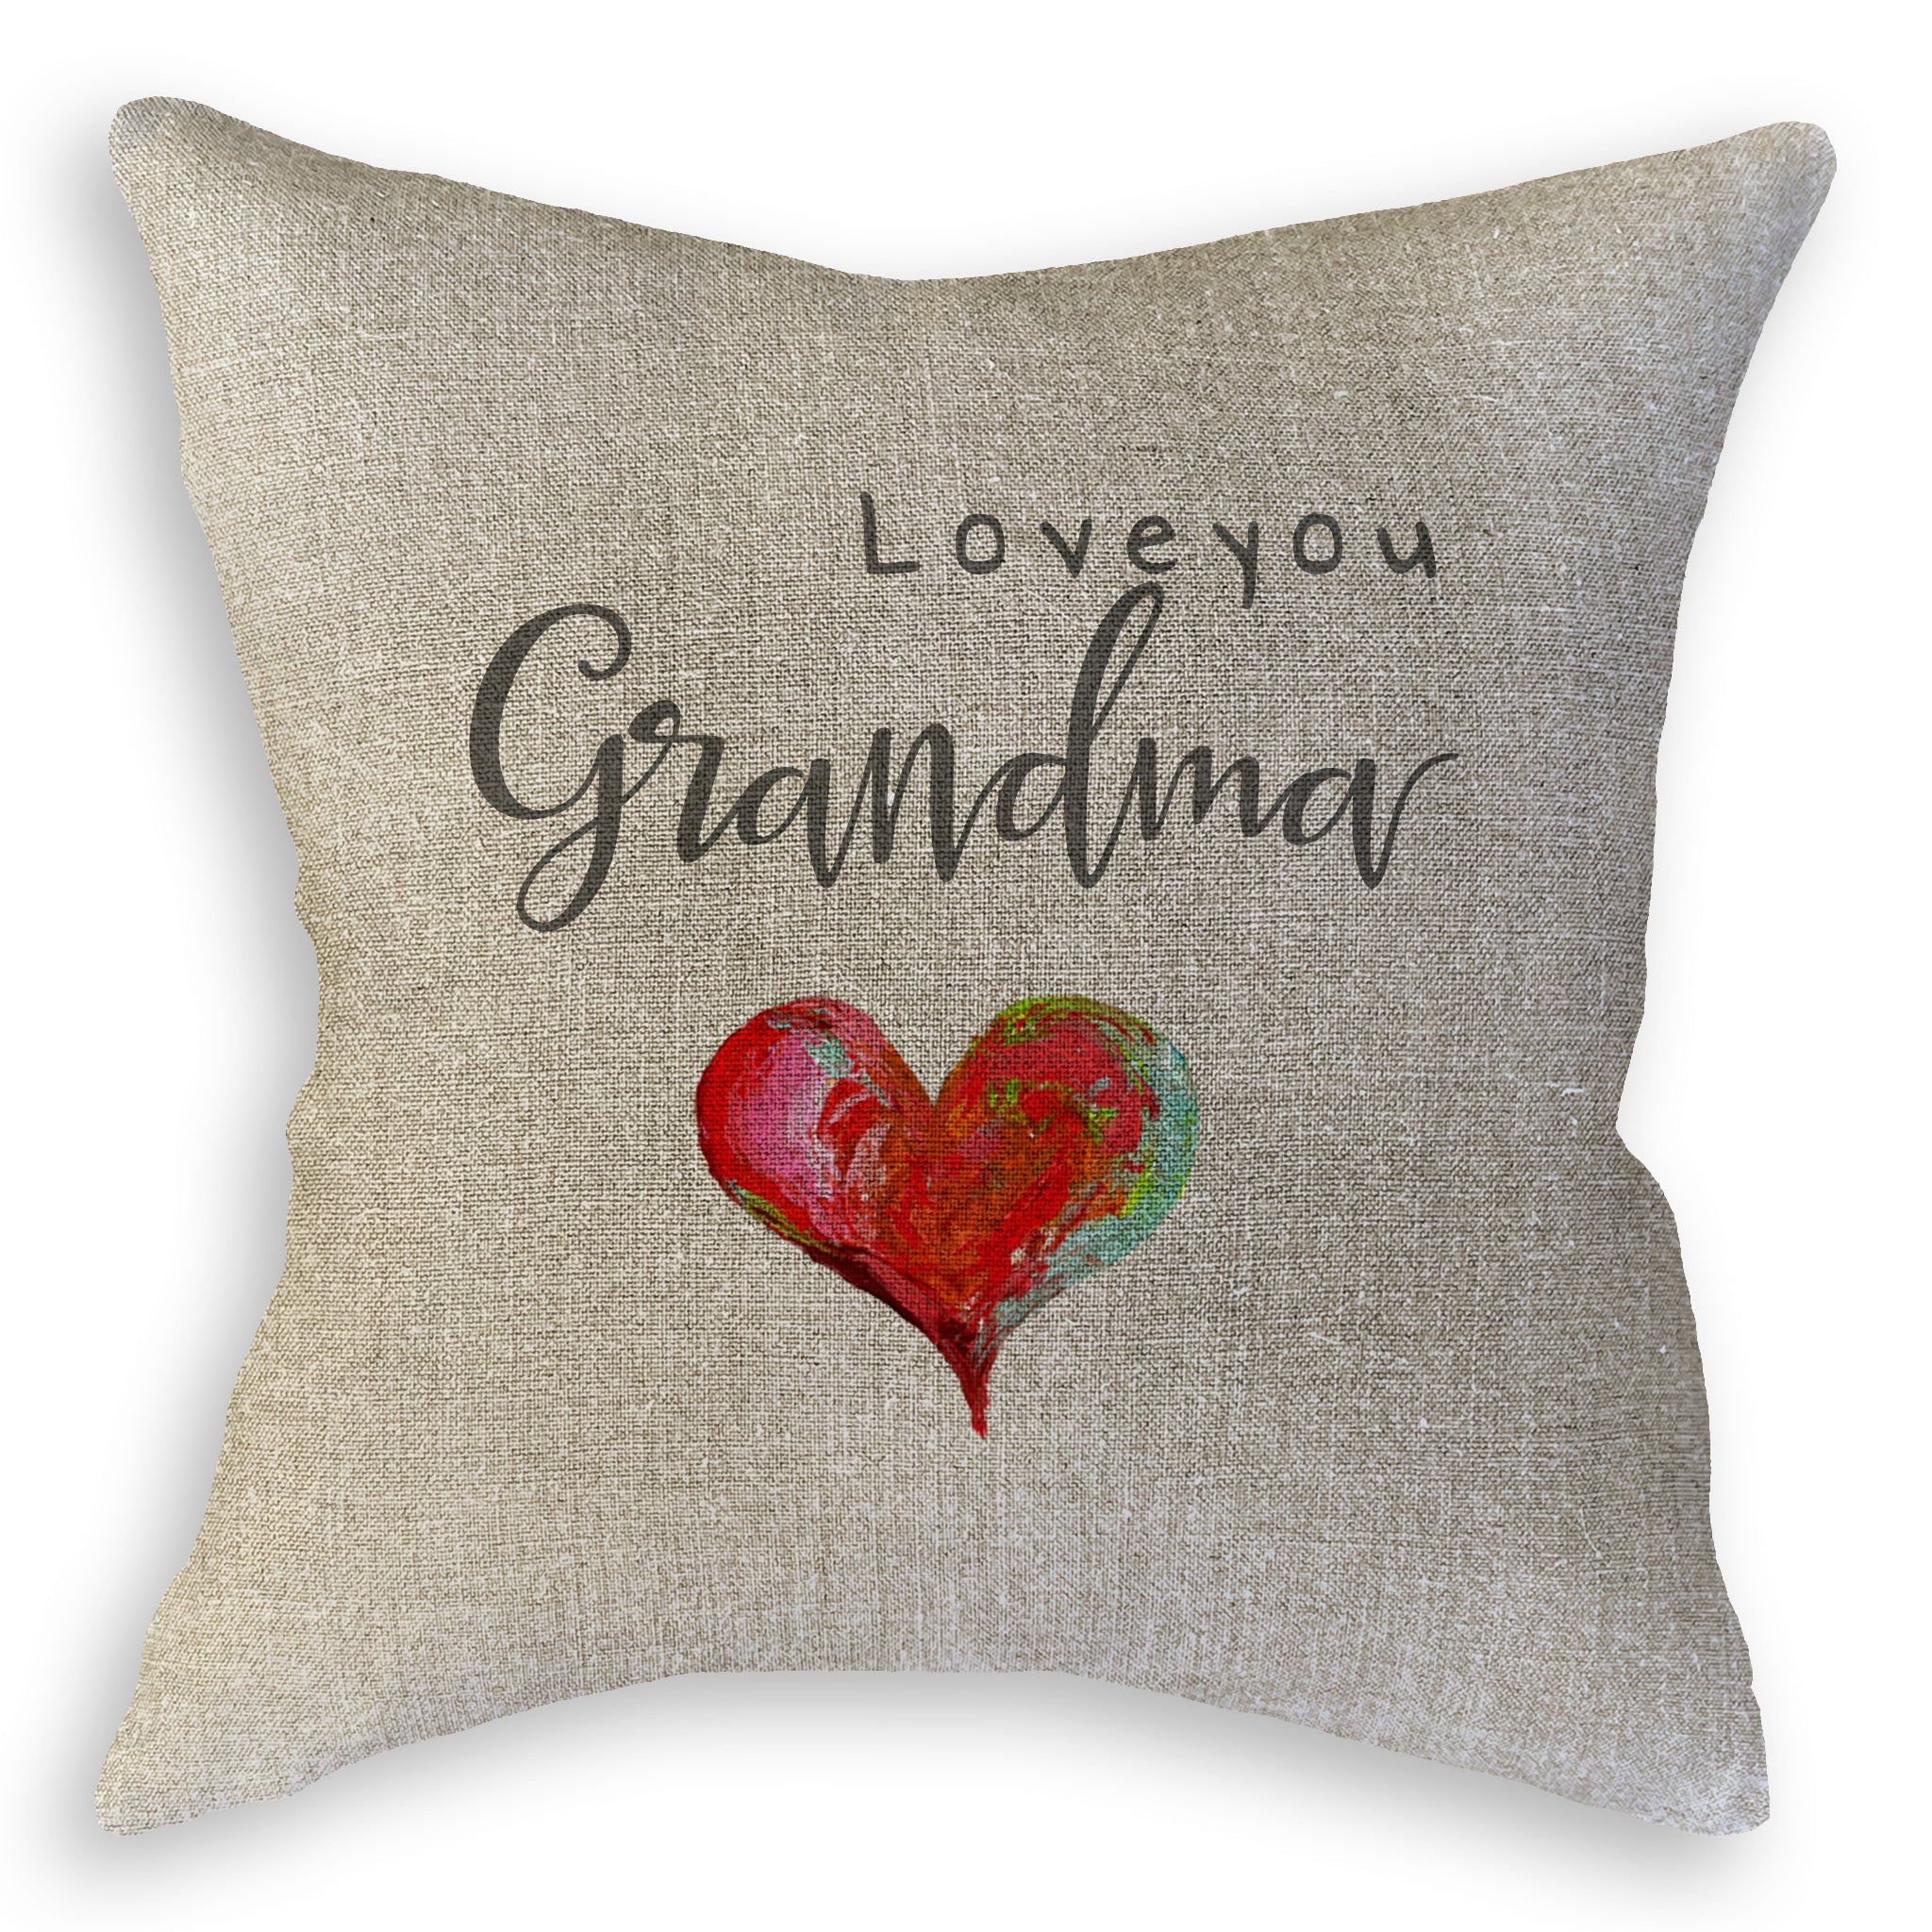 Love You Grandma – French Graffiti